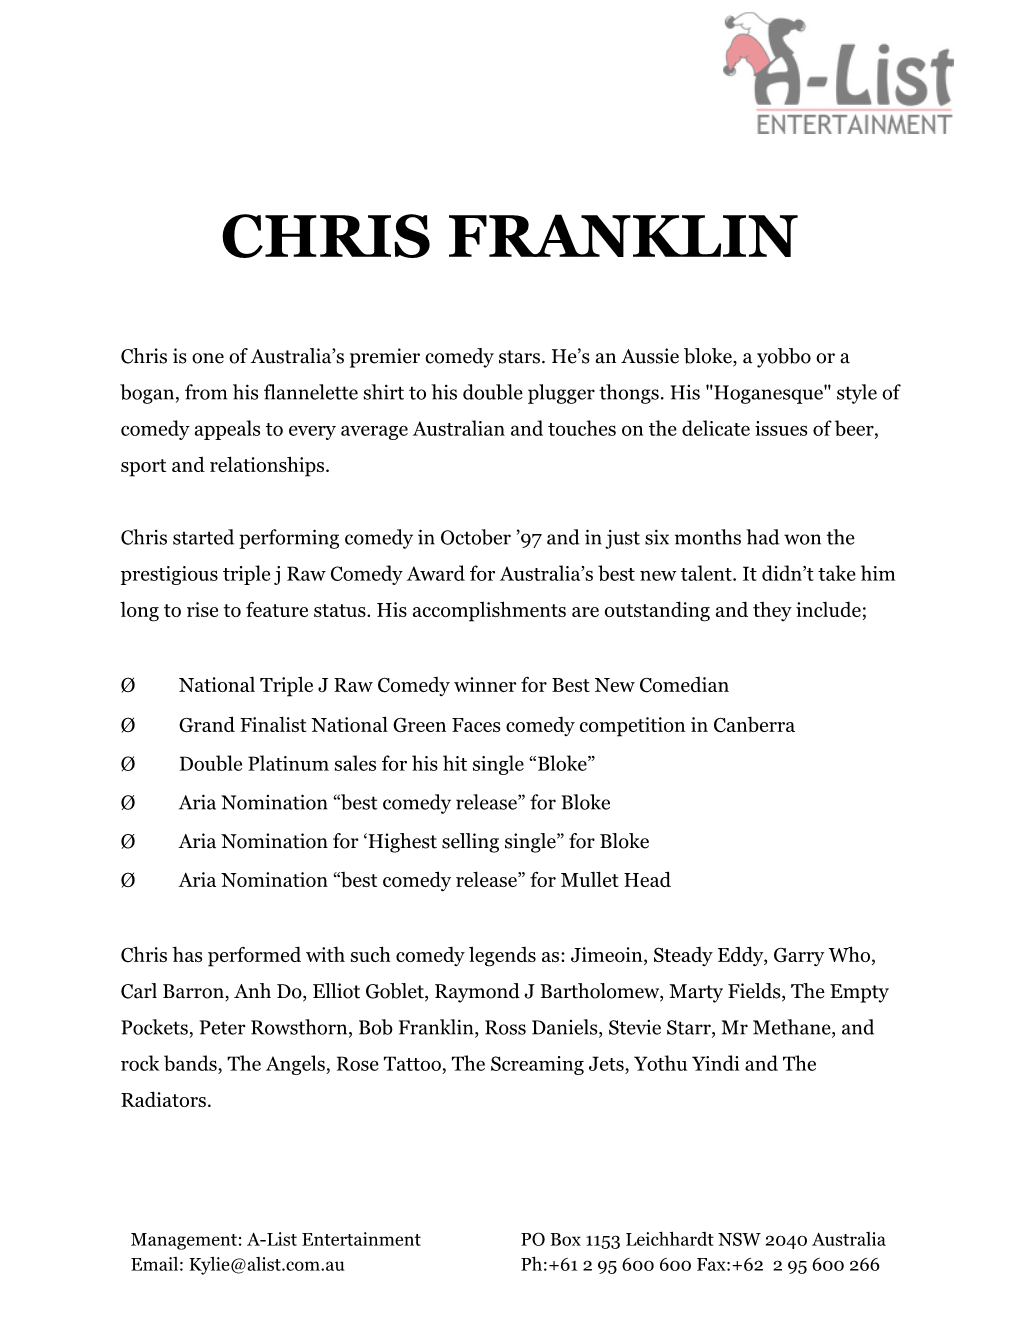 Chris Franklin